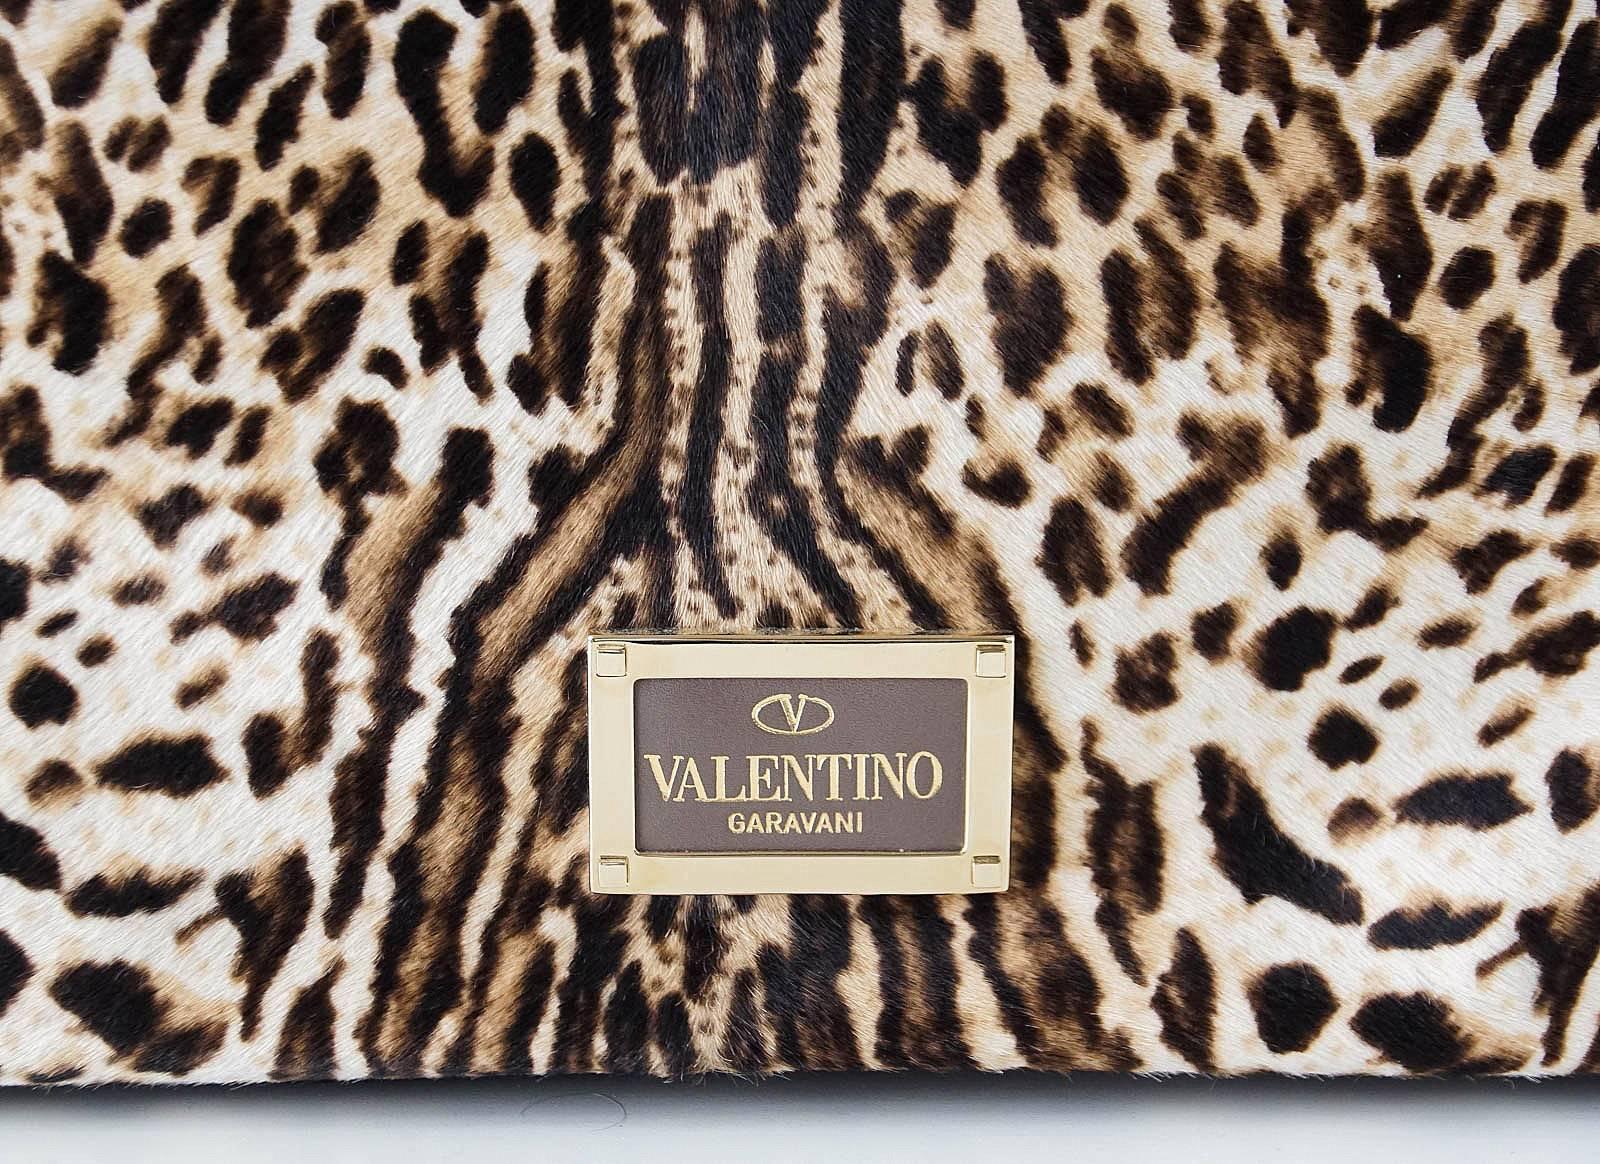 Brown VALENTINO Garavani Cavallino Rockstud Dome Satchel Animal Leopard Print